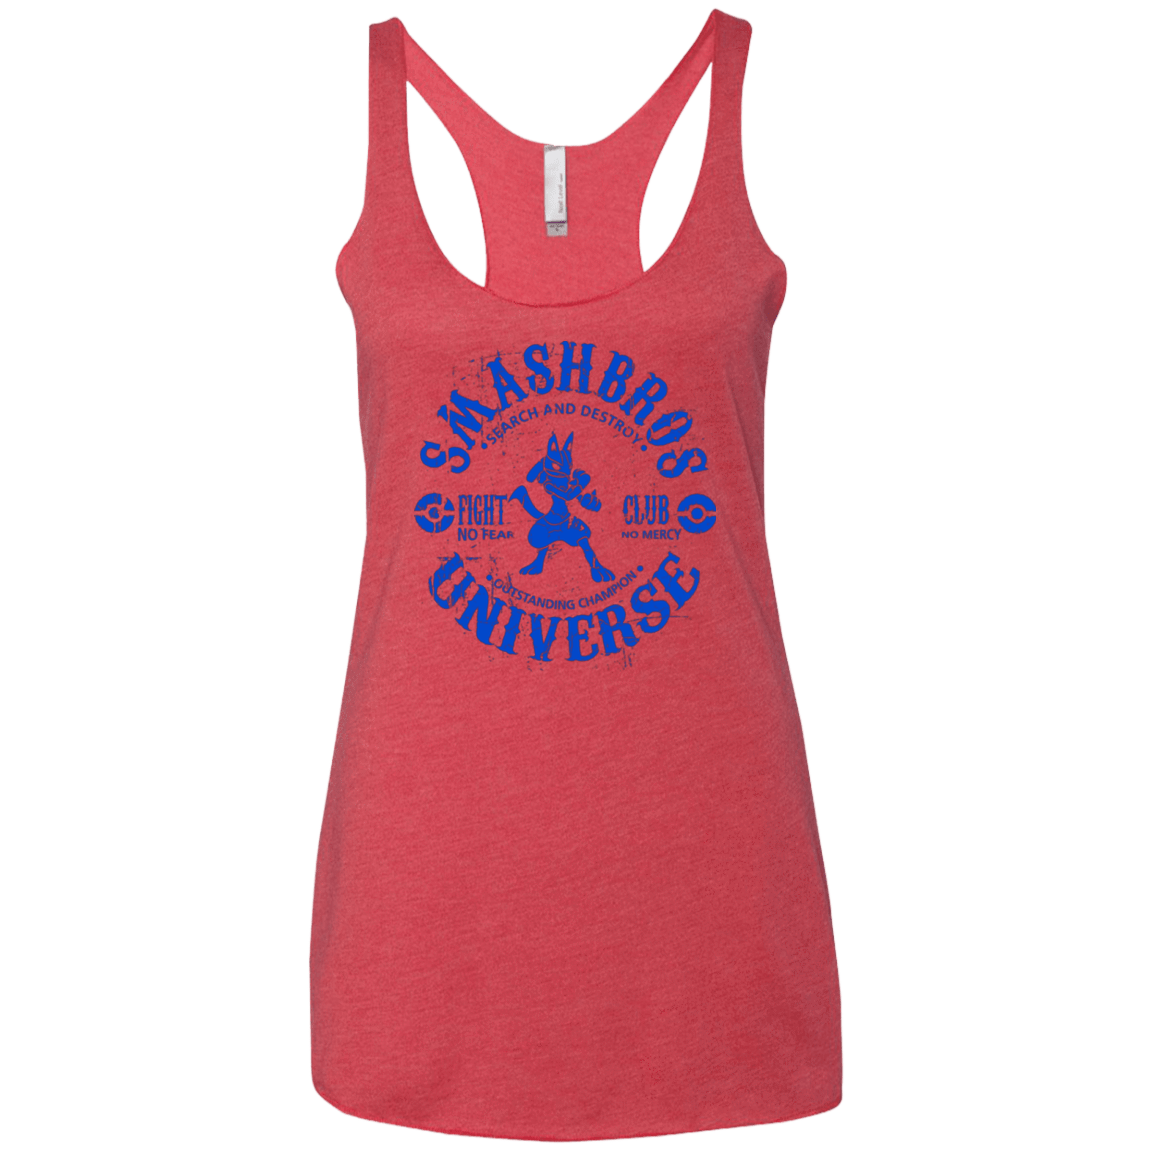 T-Shirts Vintage Red / X-Small SAFFRON CHAMPION 3 Women's Triblend Racerback Tank